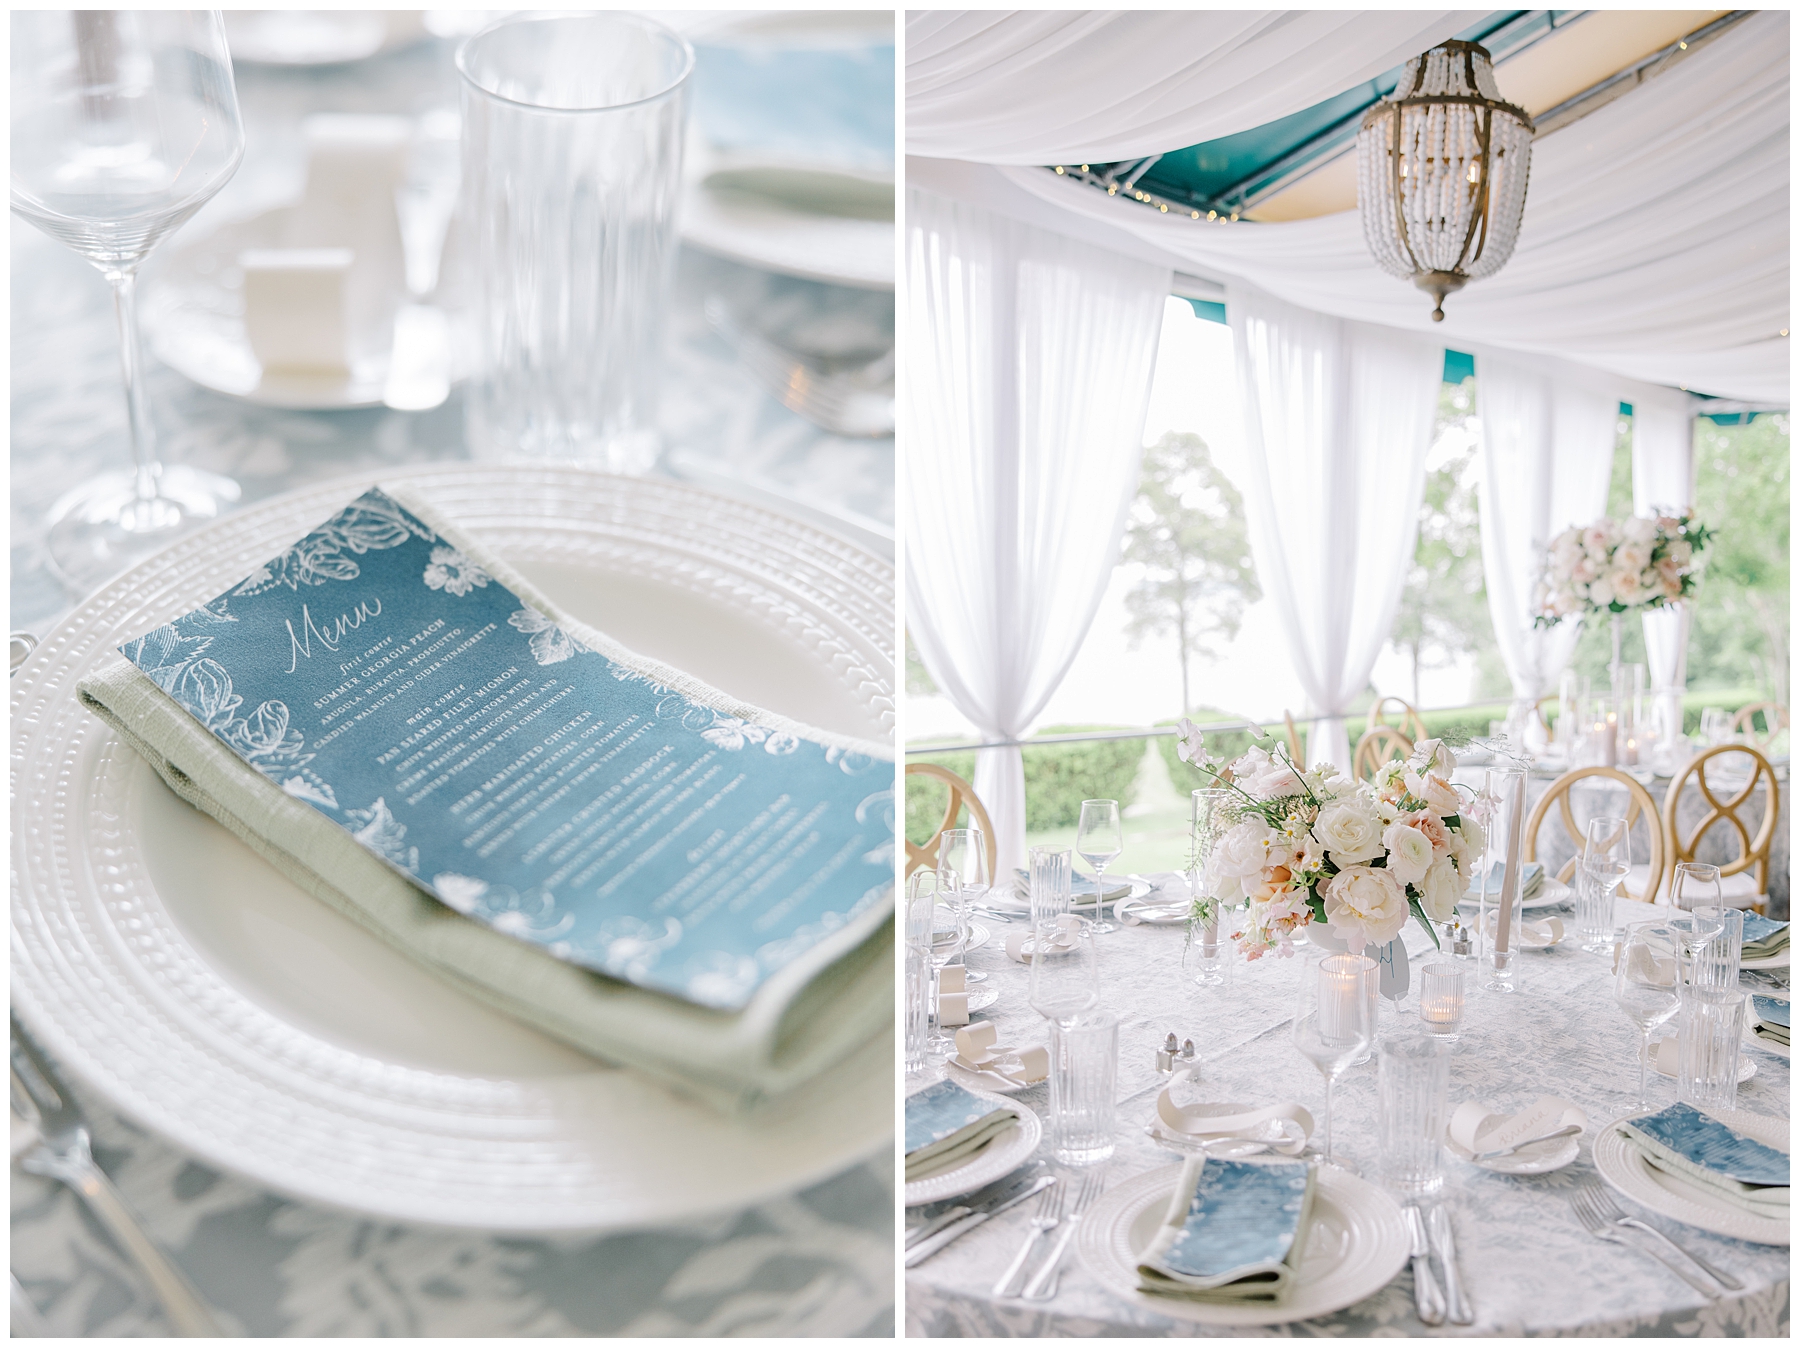 table settings at Dreamy Glen Manor Wedding reception